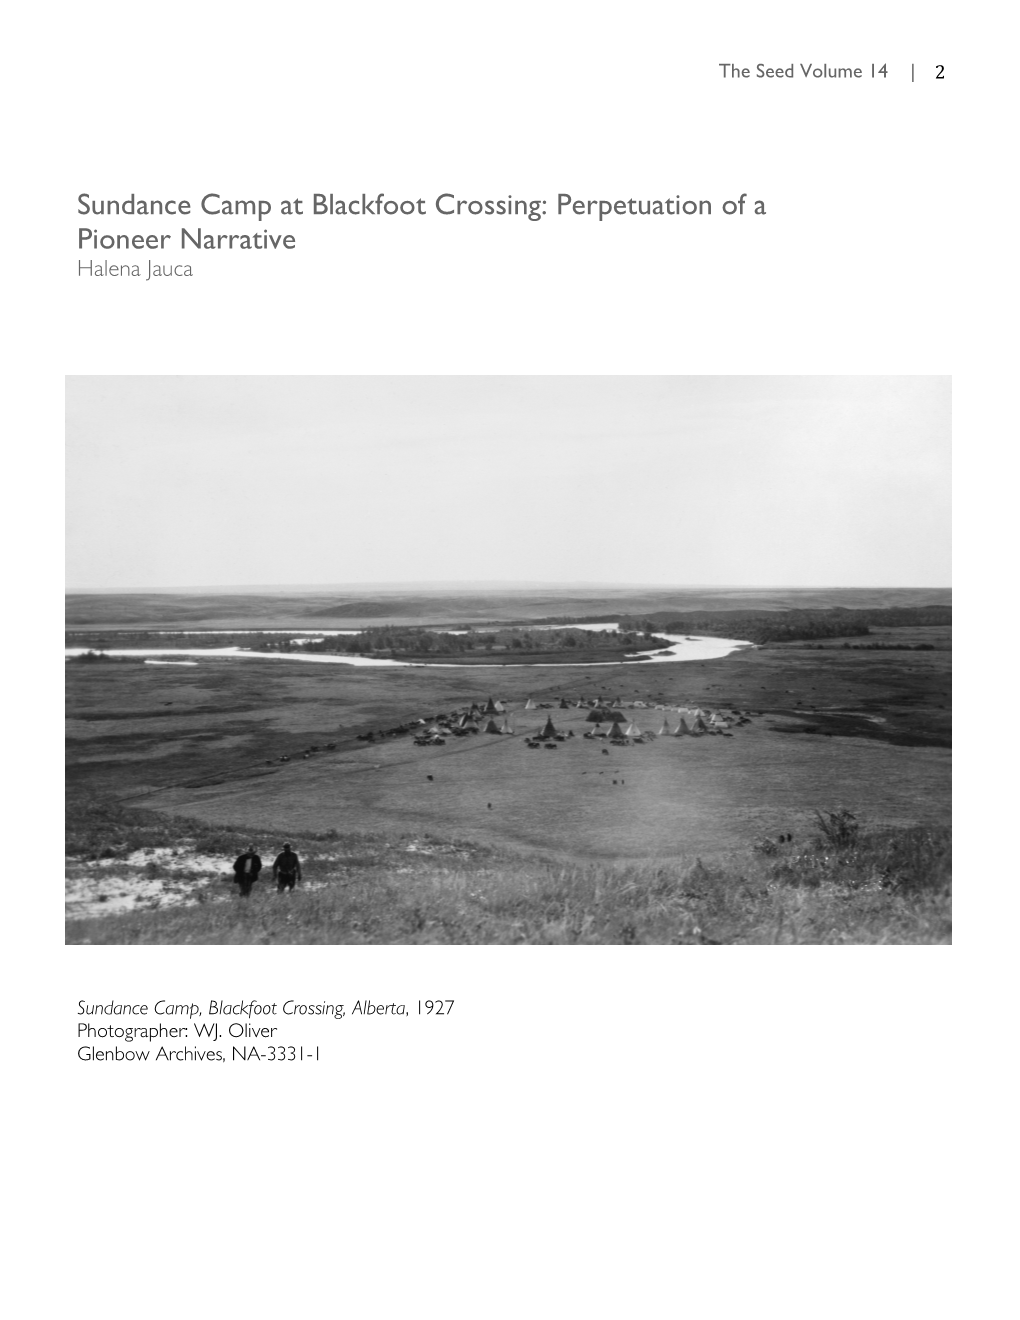 Sundance Camp at Blackfoot Crossing: Perpetuation of a Pioneer Narrative Halena Jauca